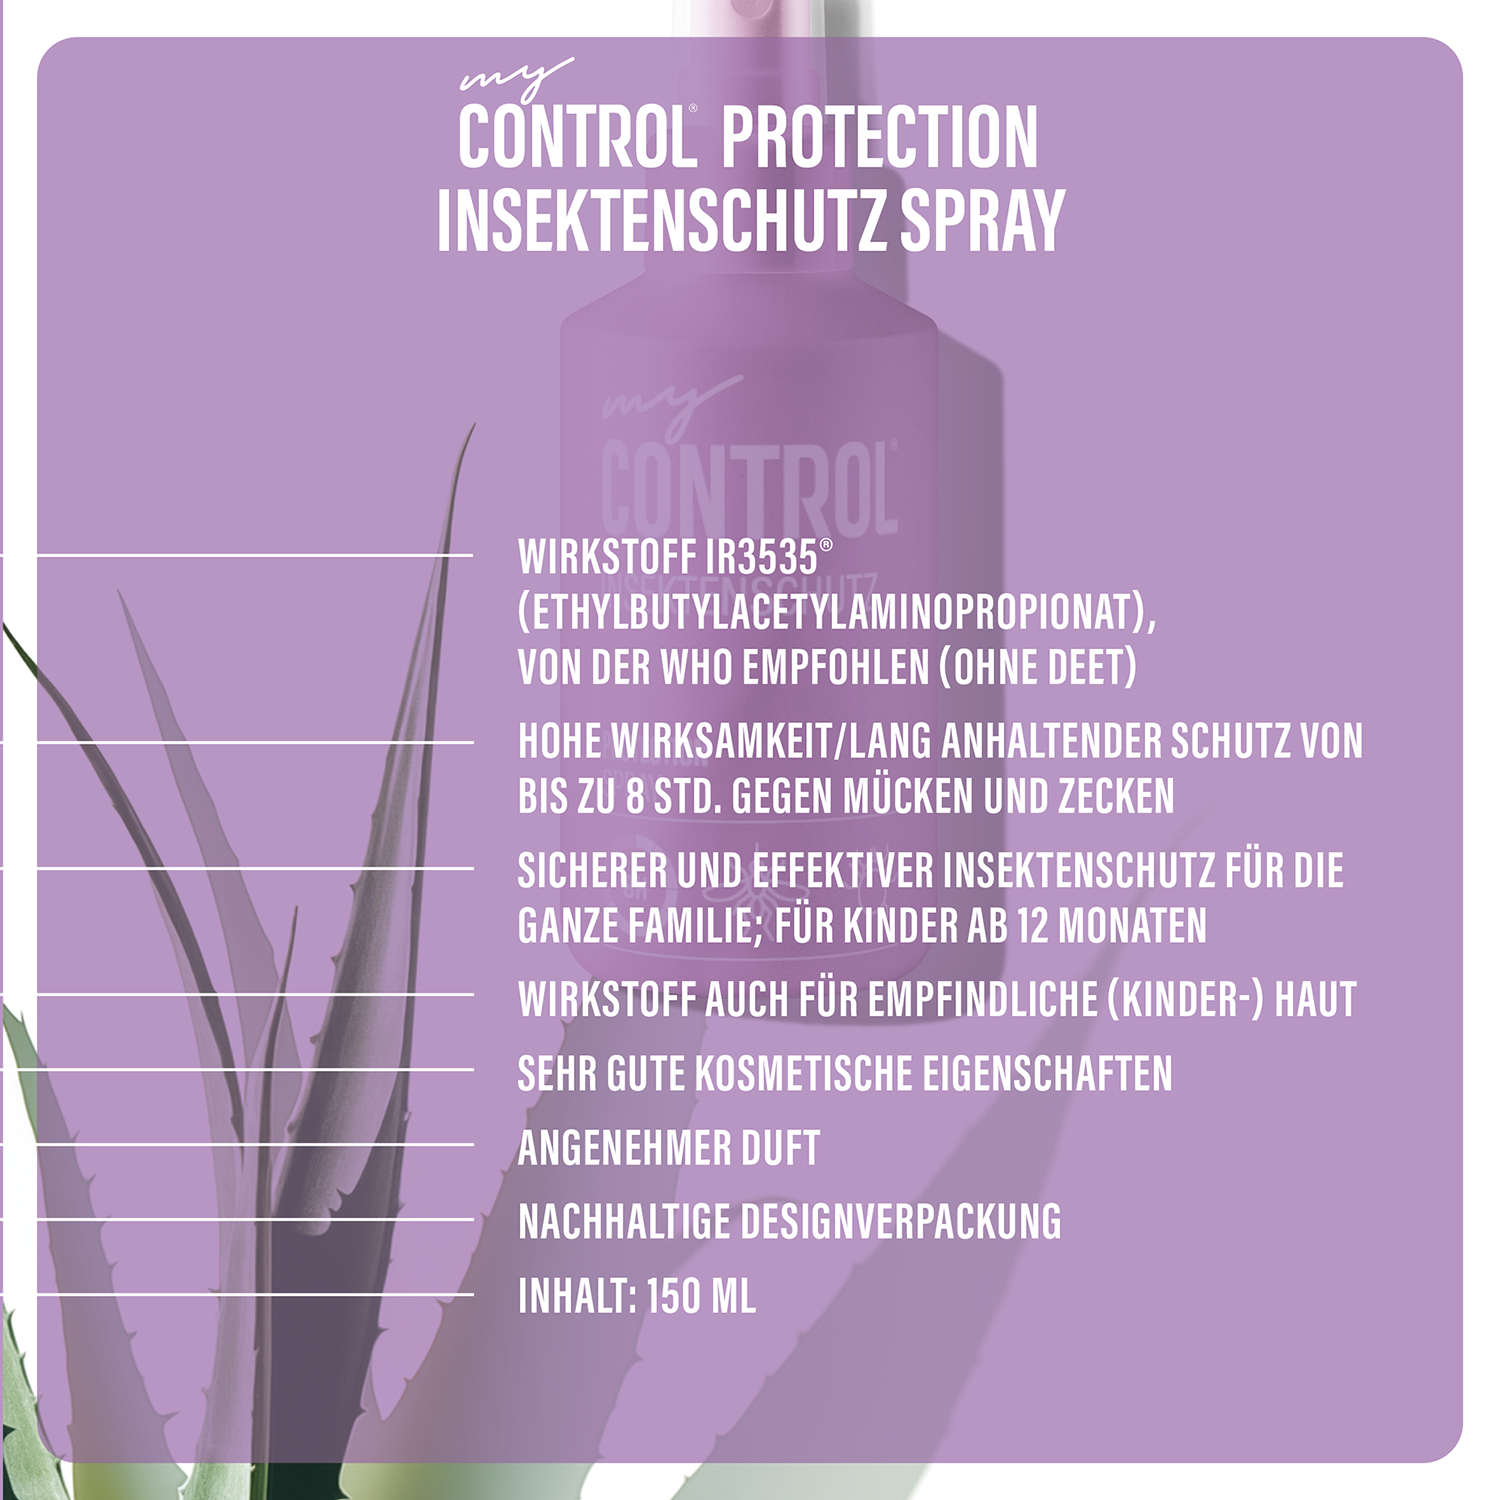 Insektenschutz Spray - DEET-frei